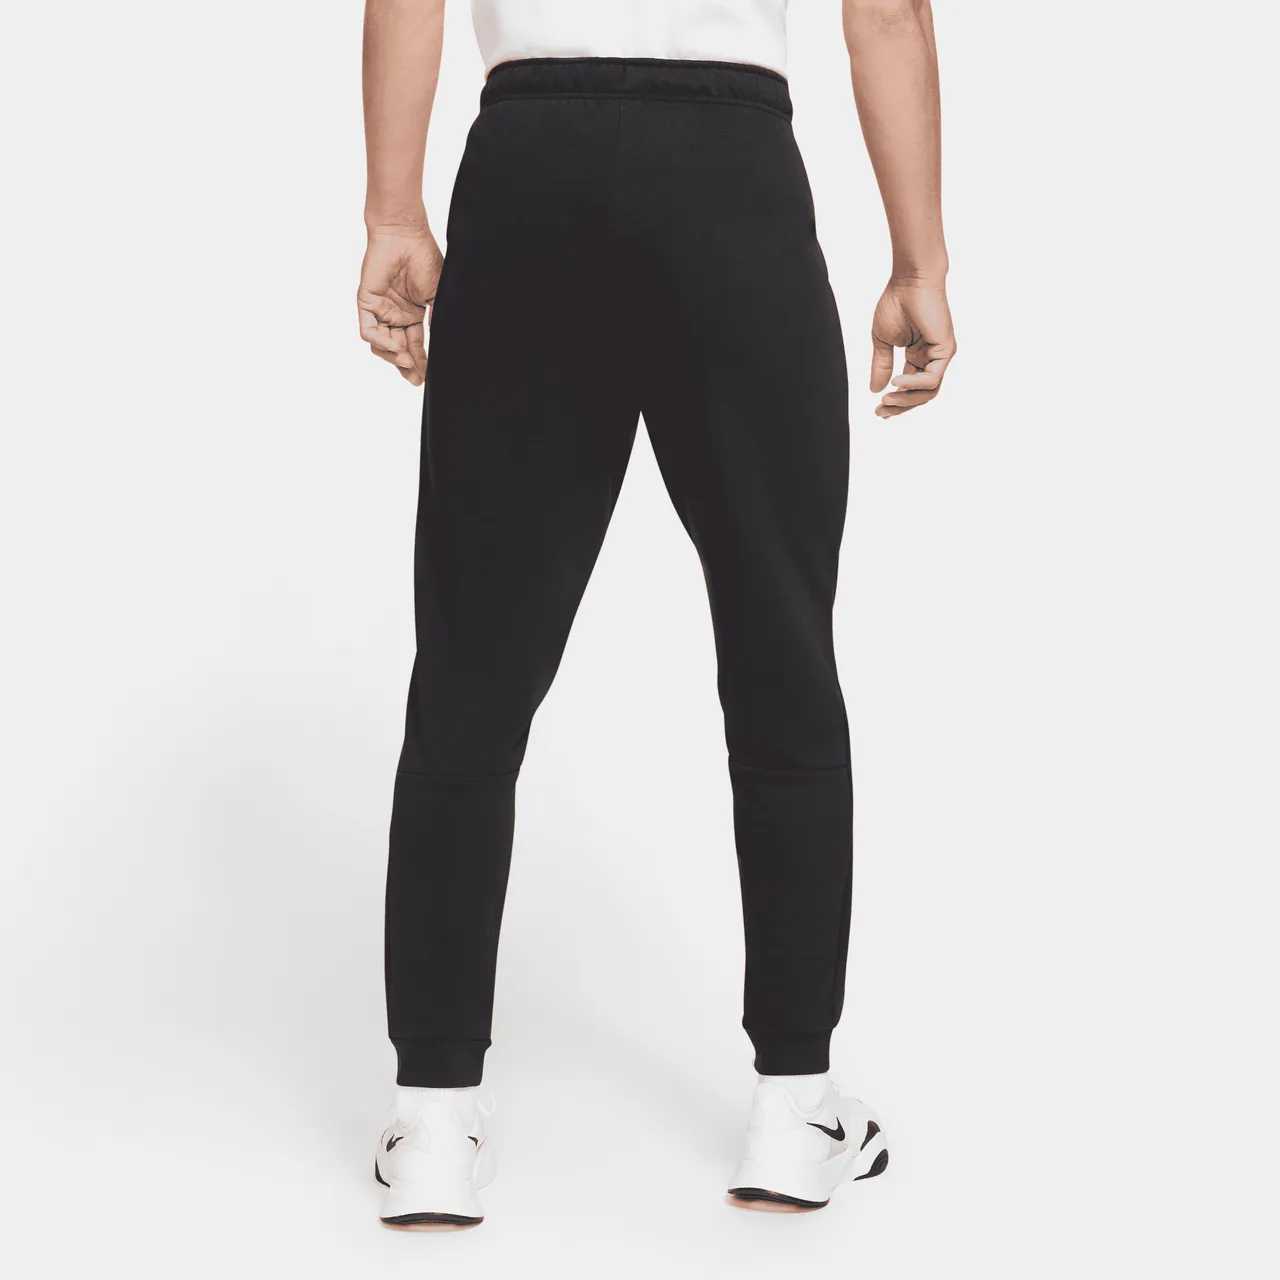 Nike Dry Men's Dri-FIT Taper Fitness Fleece Trousers - Black - Polyester